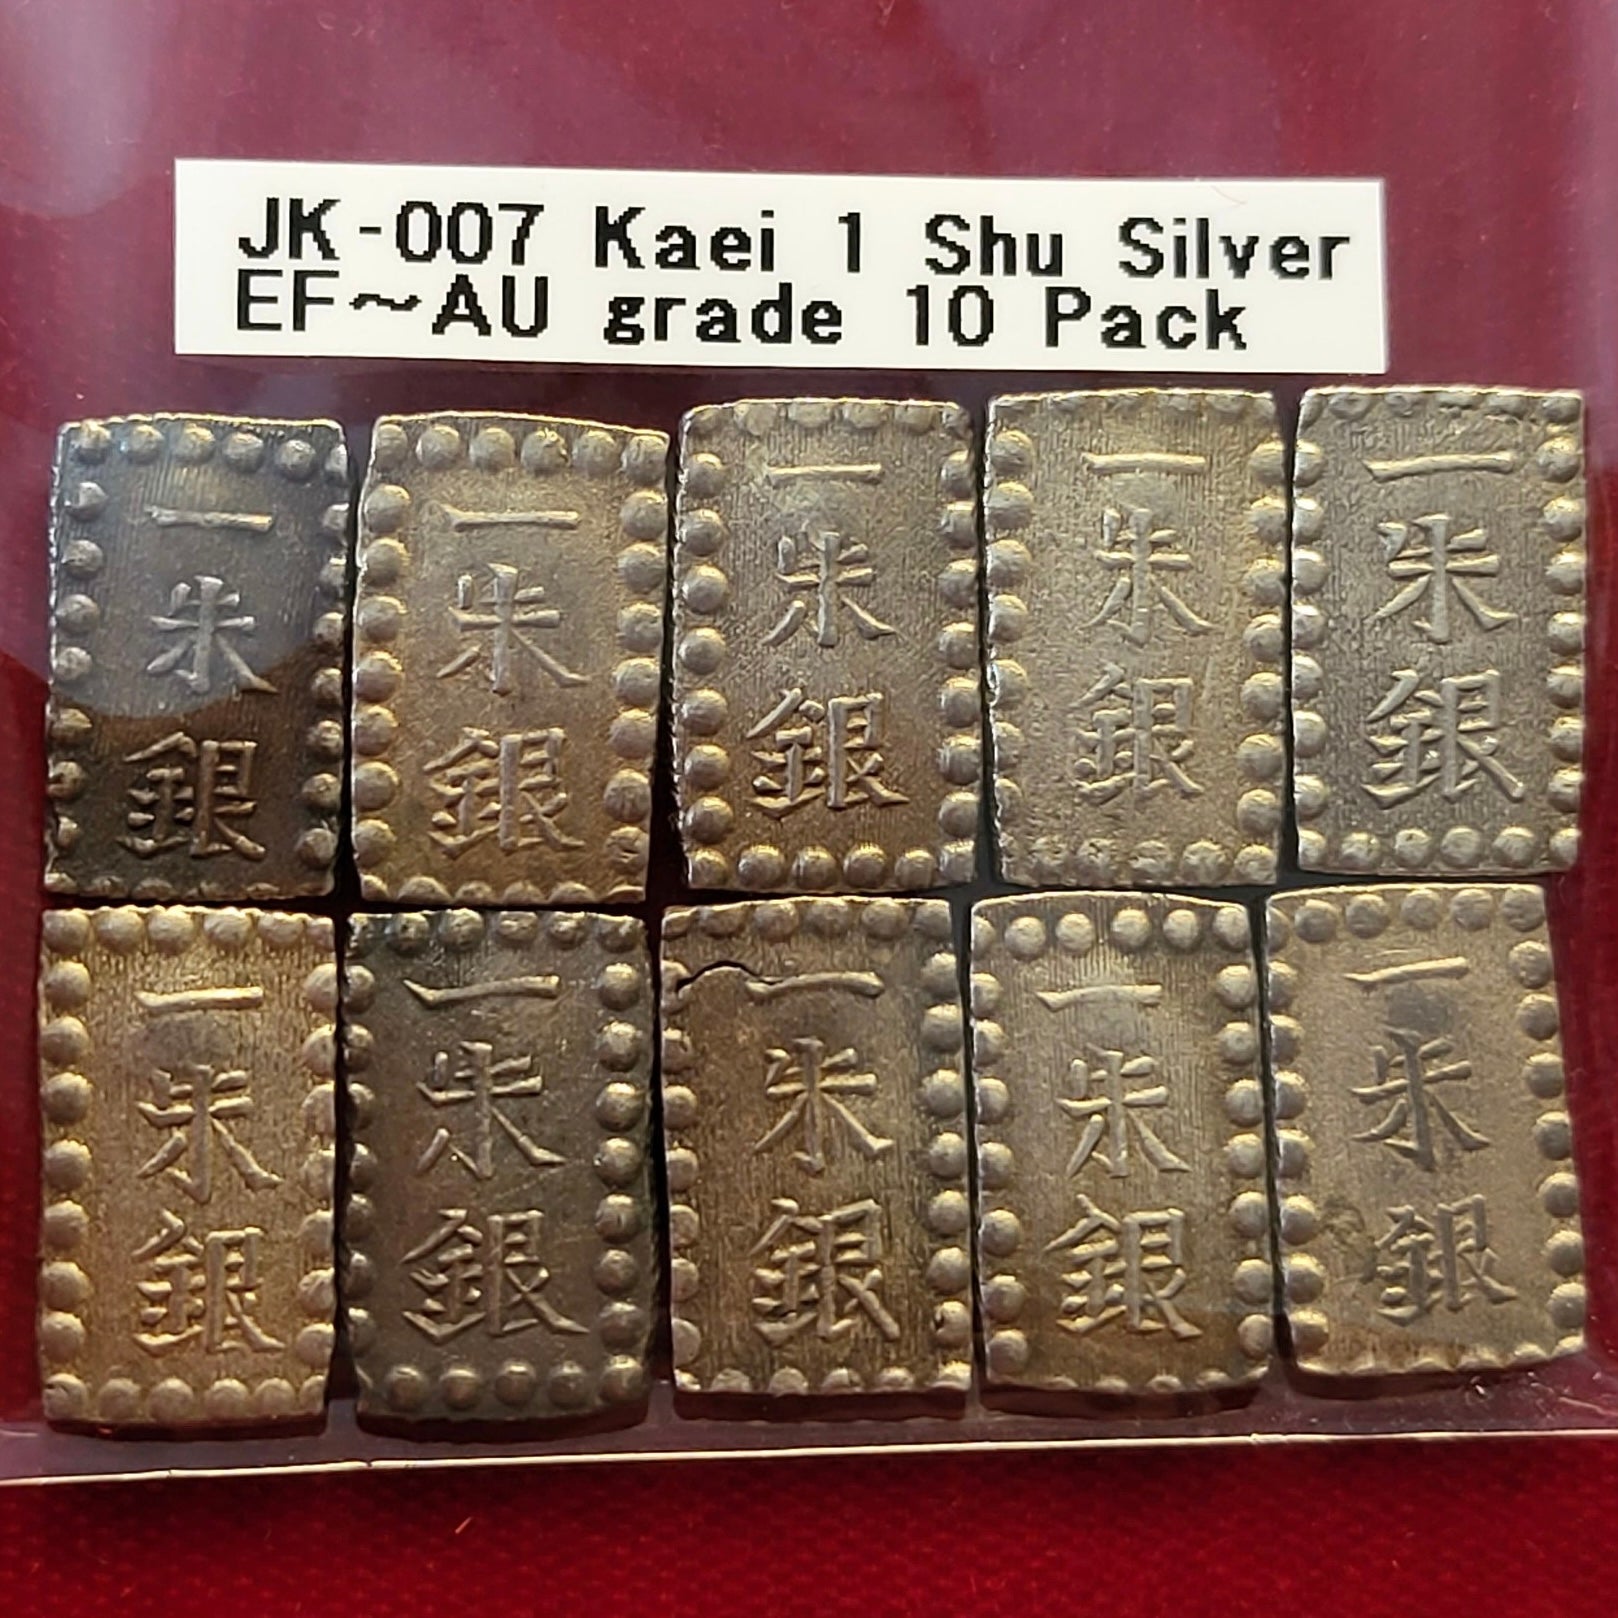 Kaei 1 Shu Silver EF~AU grade 10 Pack